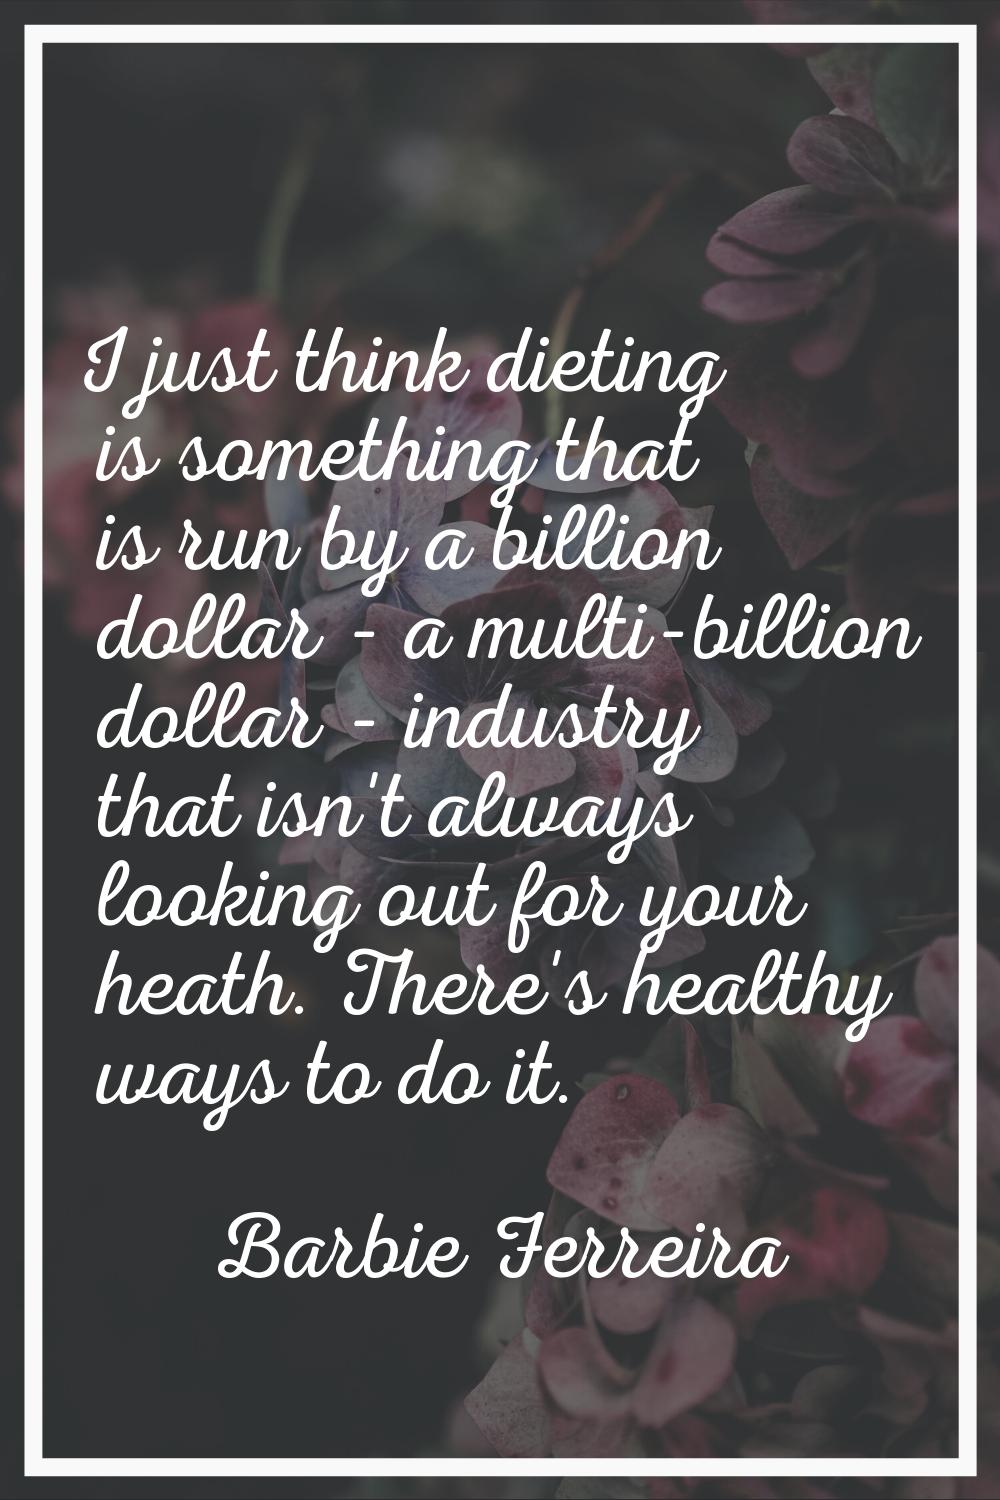 I just think dieting is something that is run by a billion dollar - a multi-billion dollar - indust